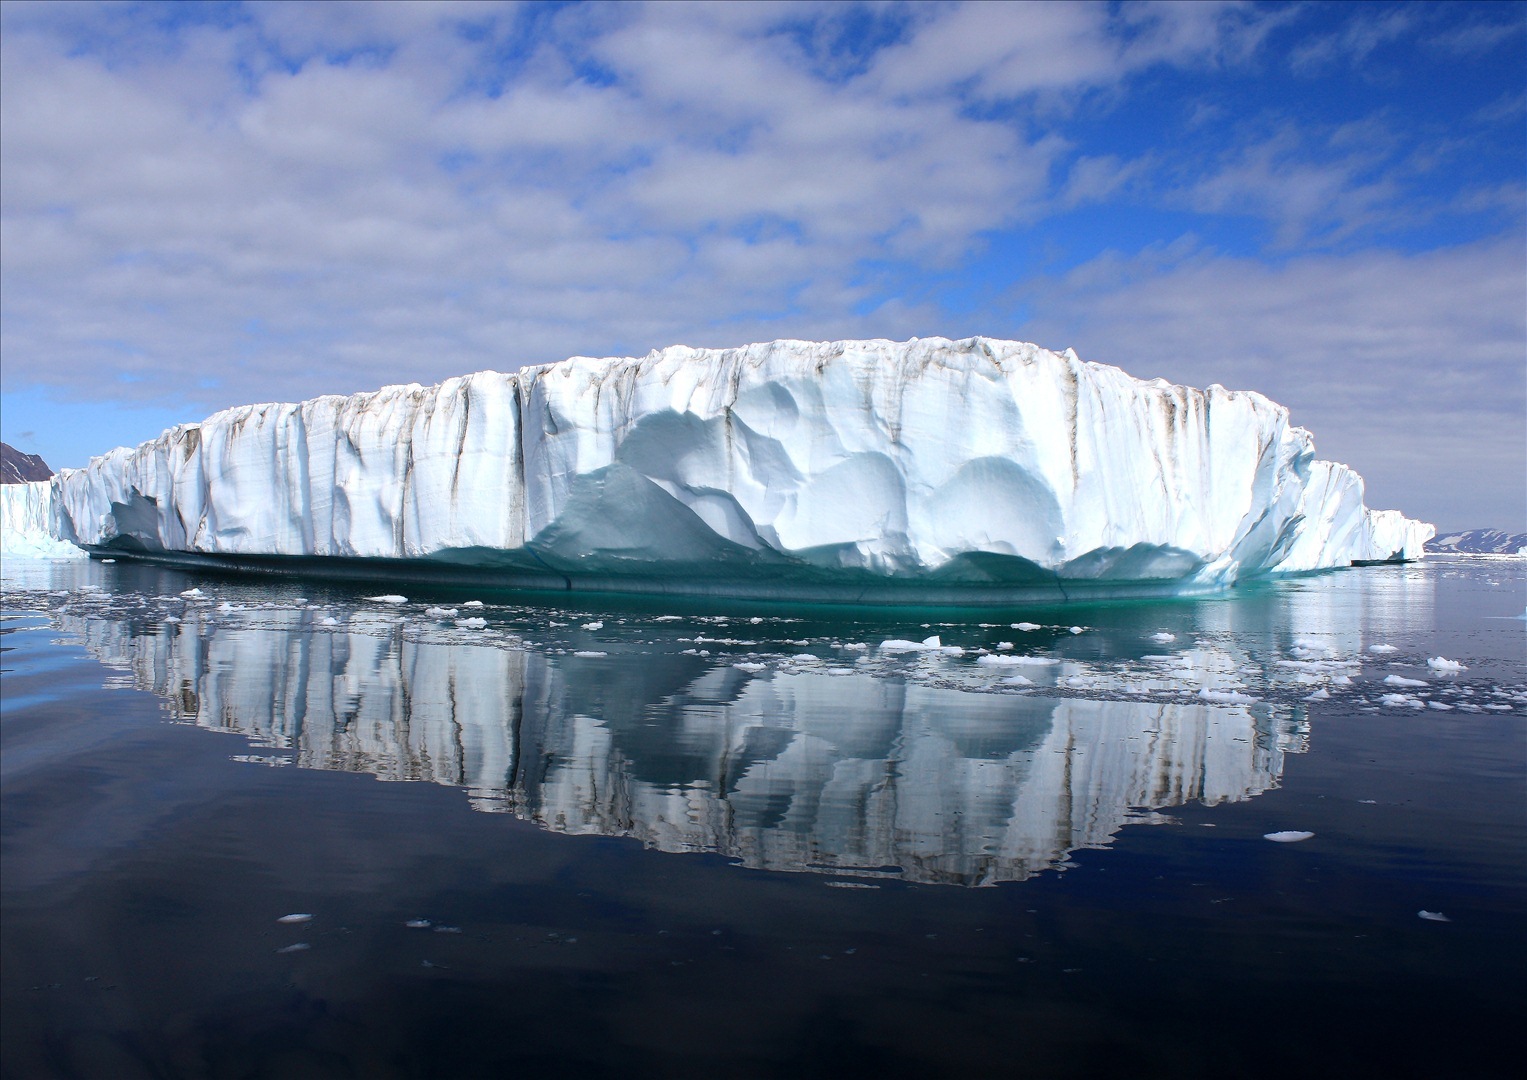 Polar Ice: Not Receding According to N.A.S.A